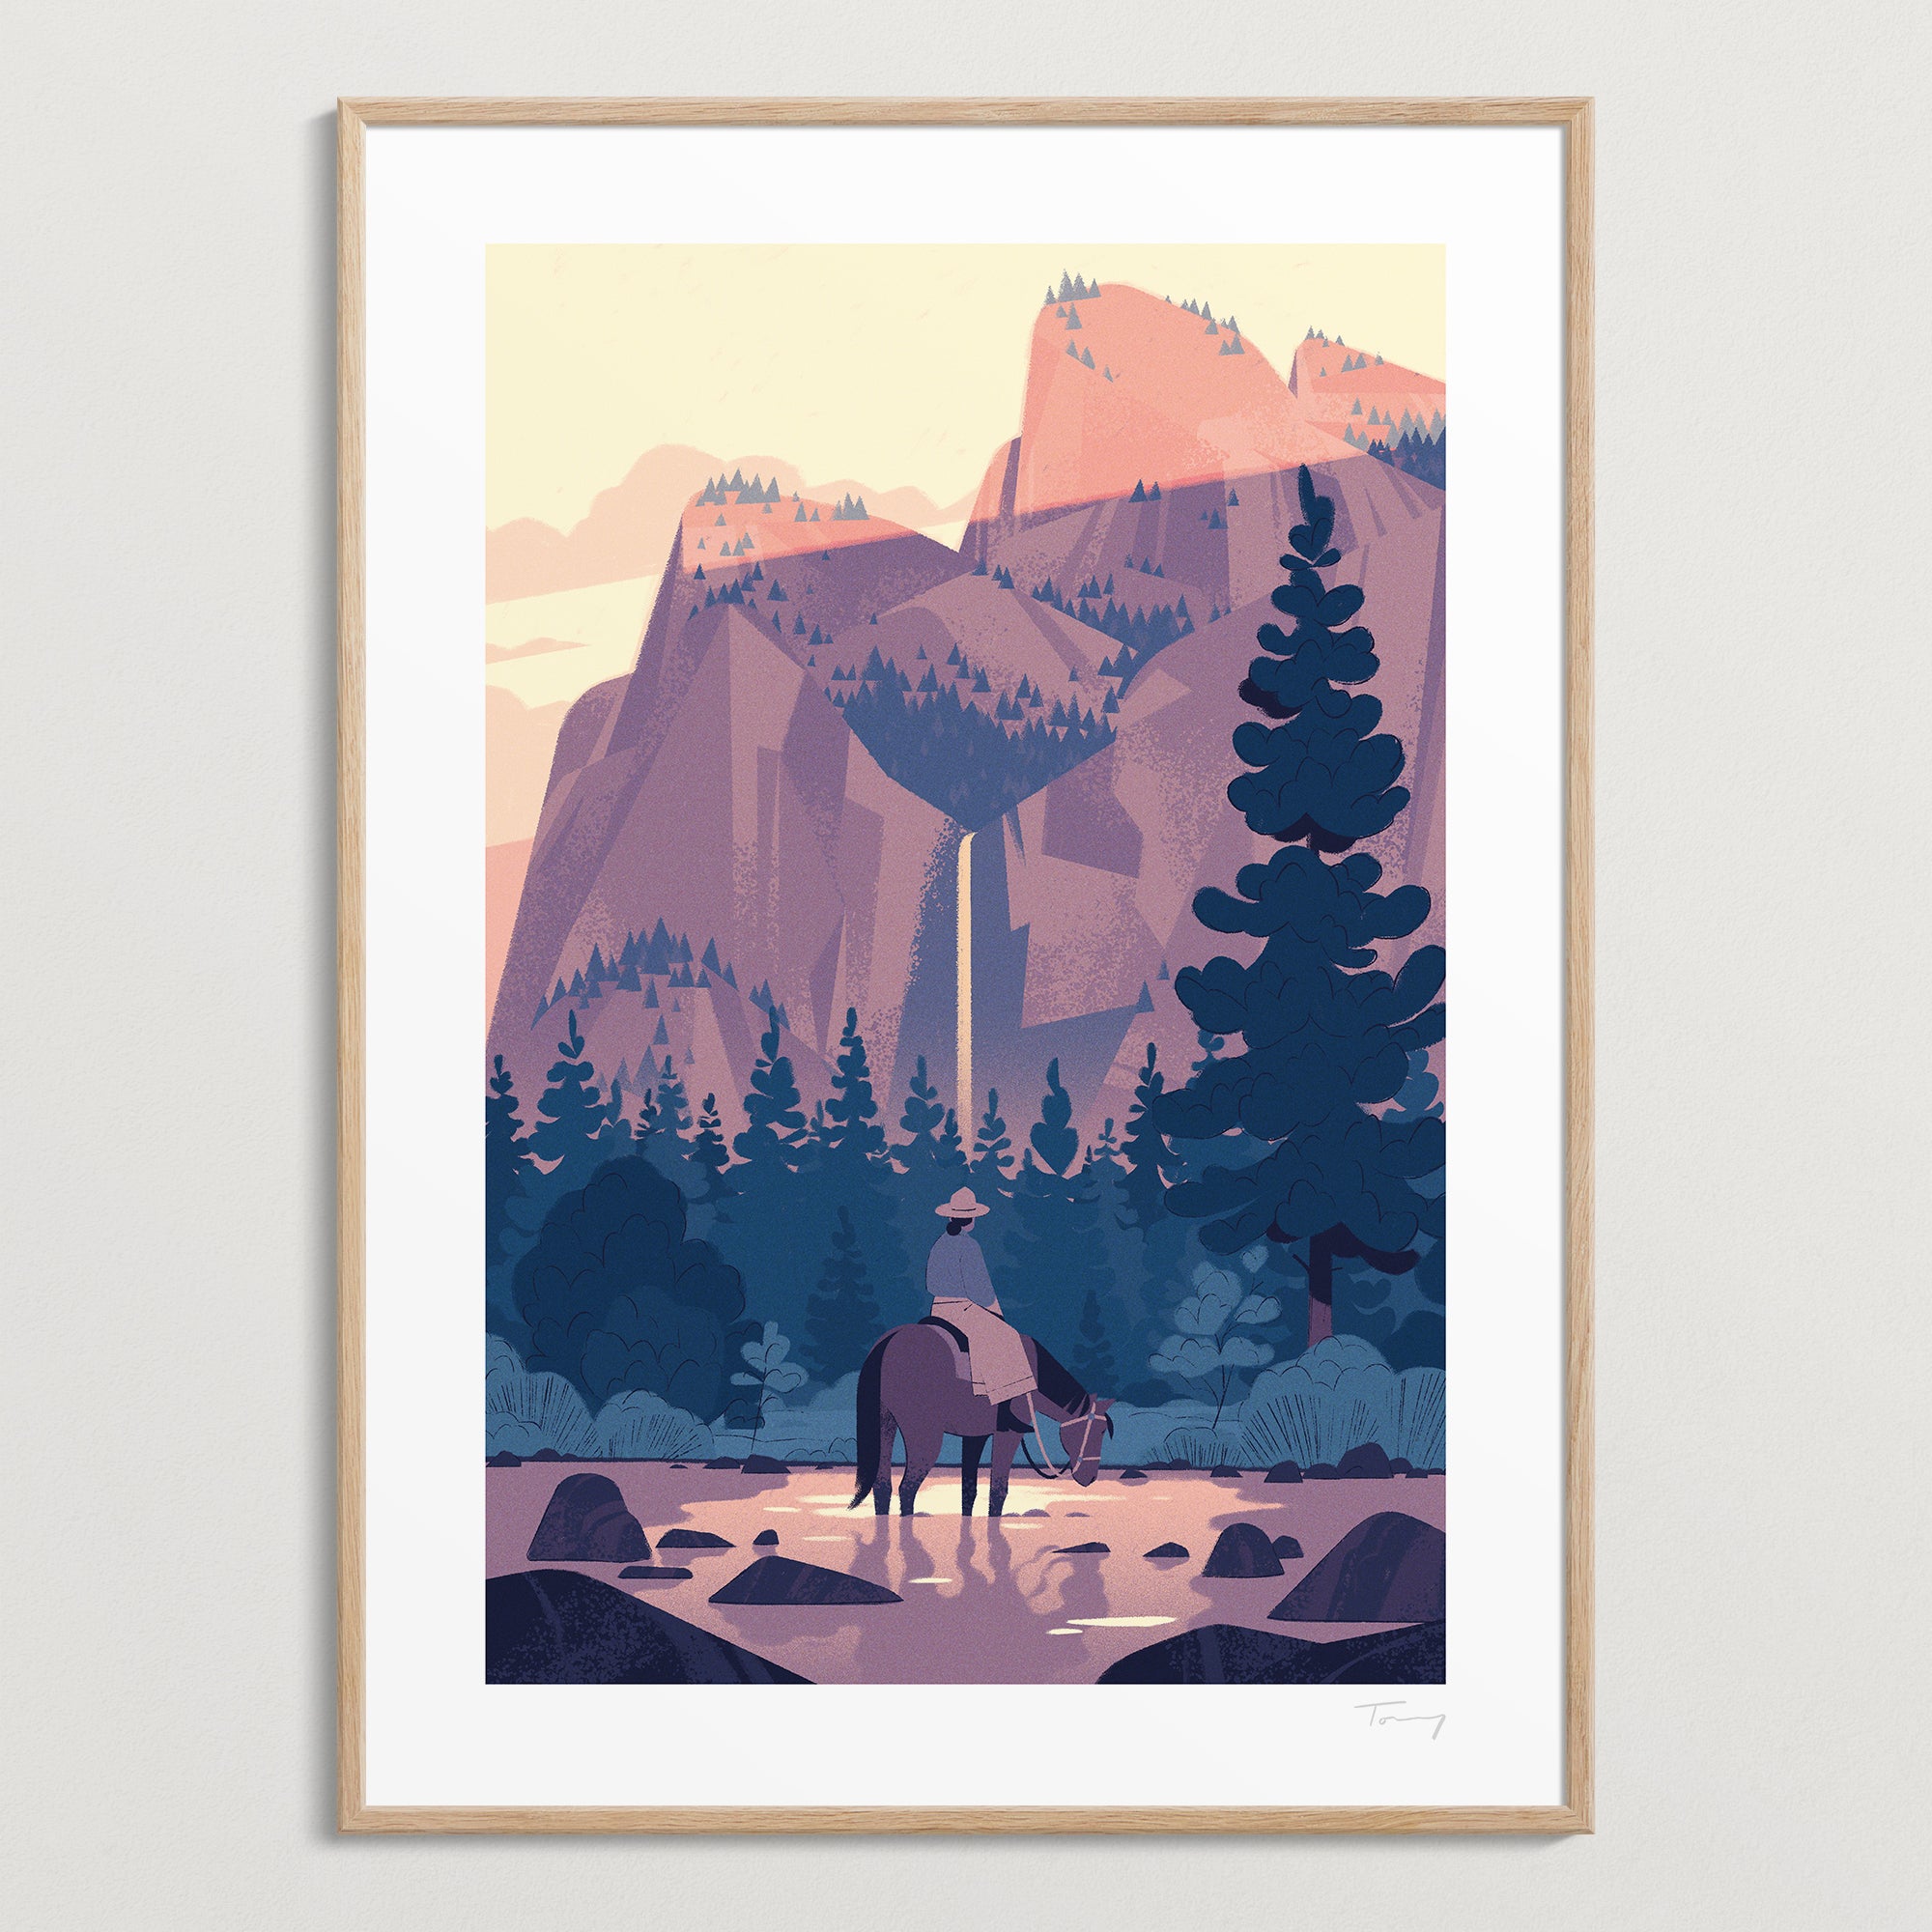 The Yosemite Ranger